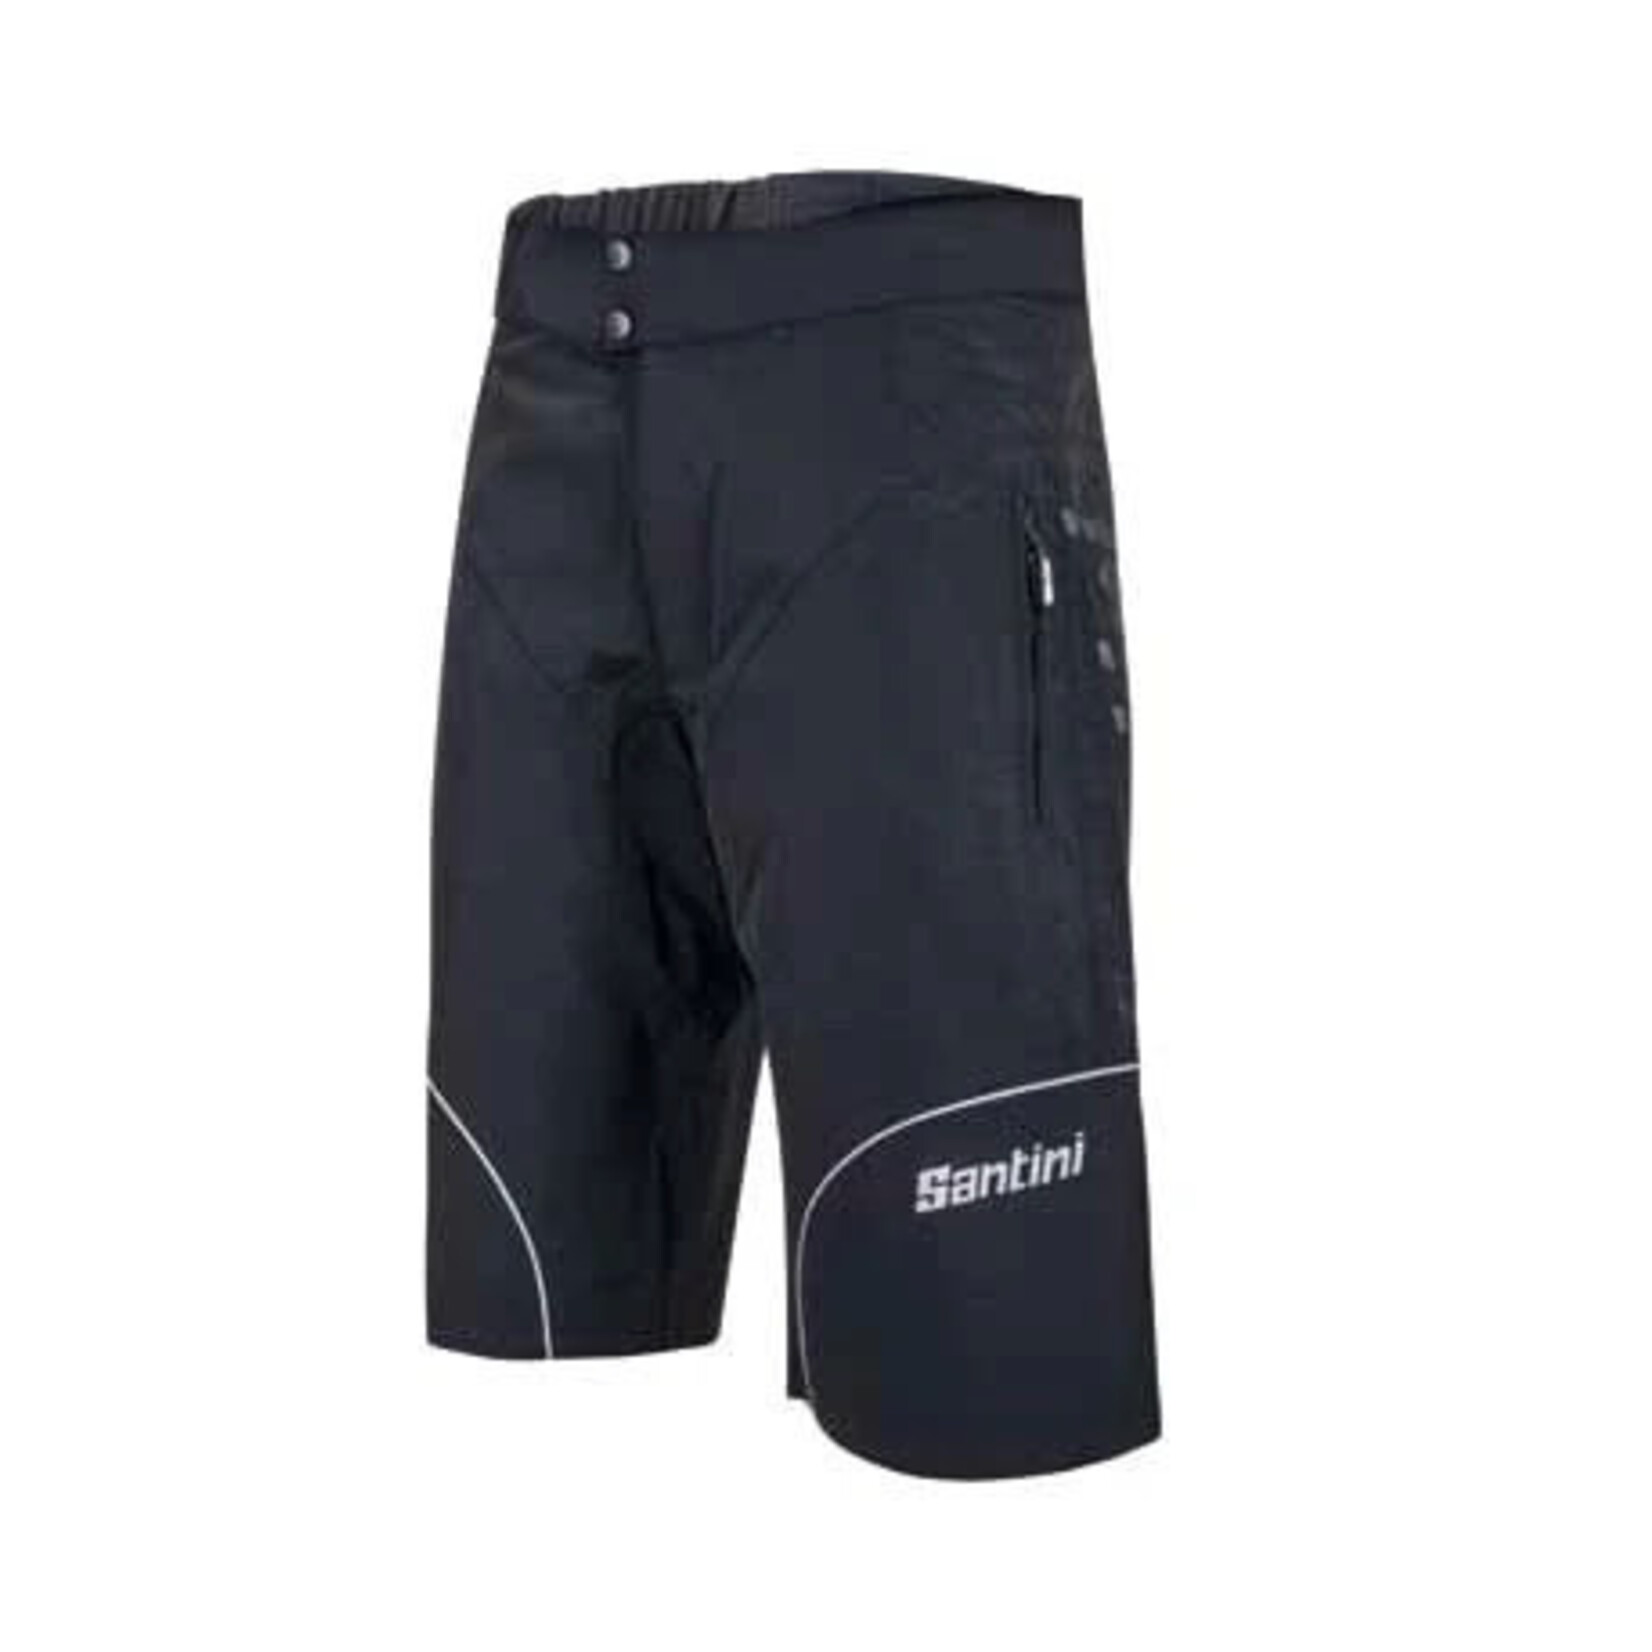 Santini Forge MTB Shorts (Black / Medium)